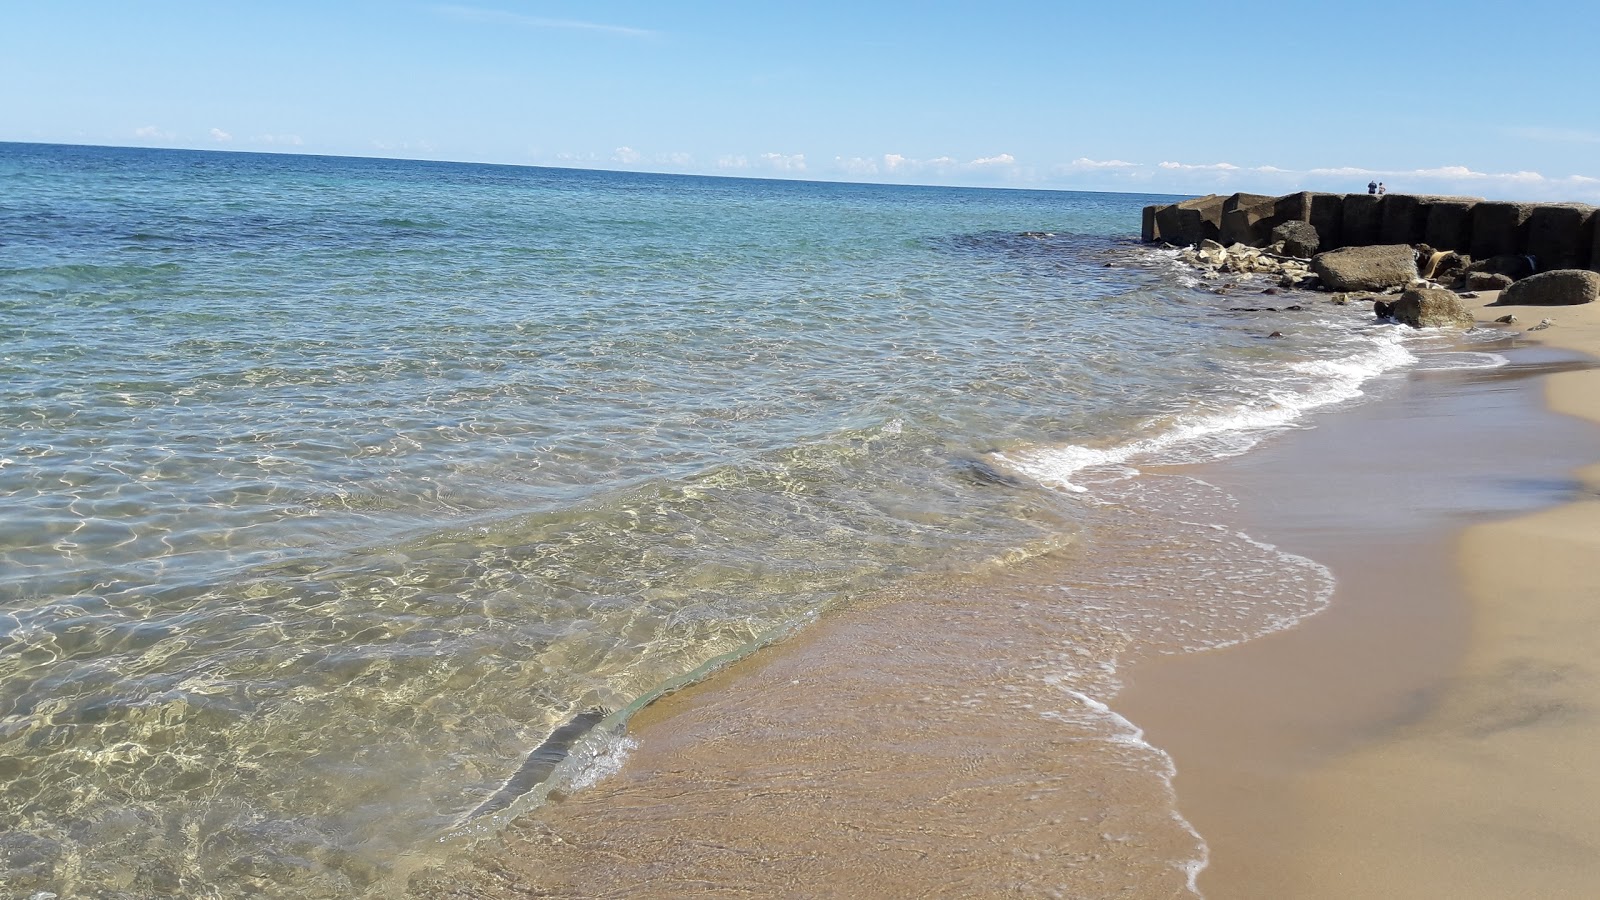 Foto von Spiaggia di Sciaia II mit heller sand Oberfläche